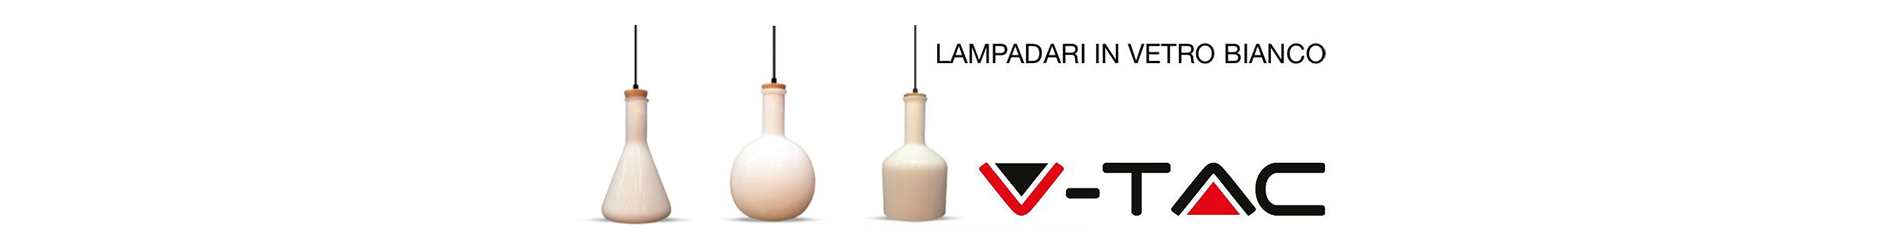 lampadari_in_vetro_bianco